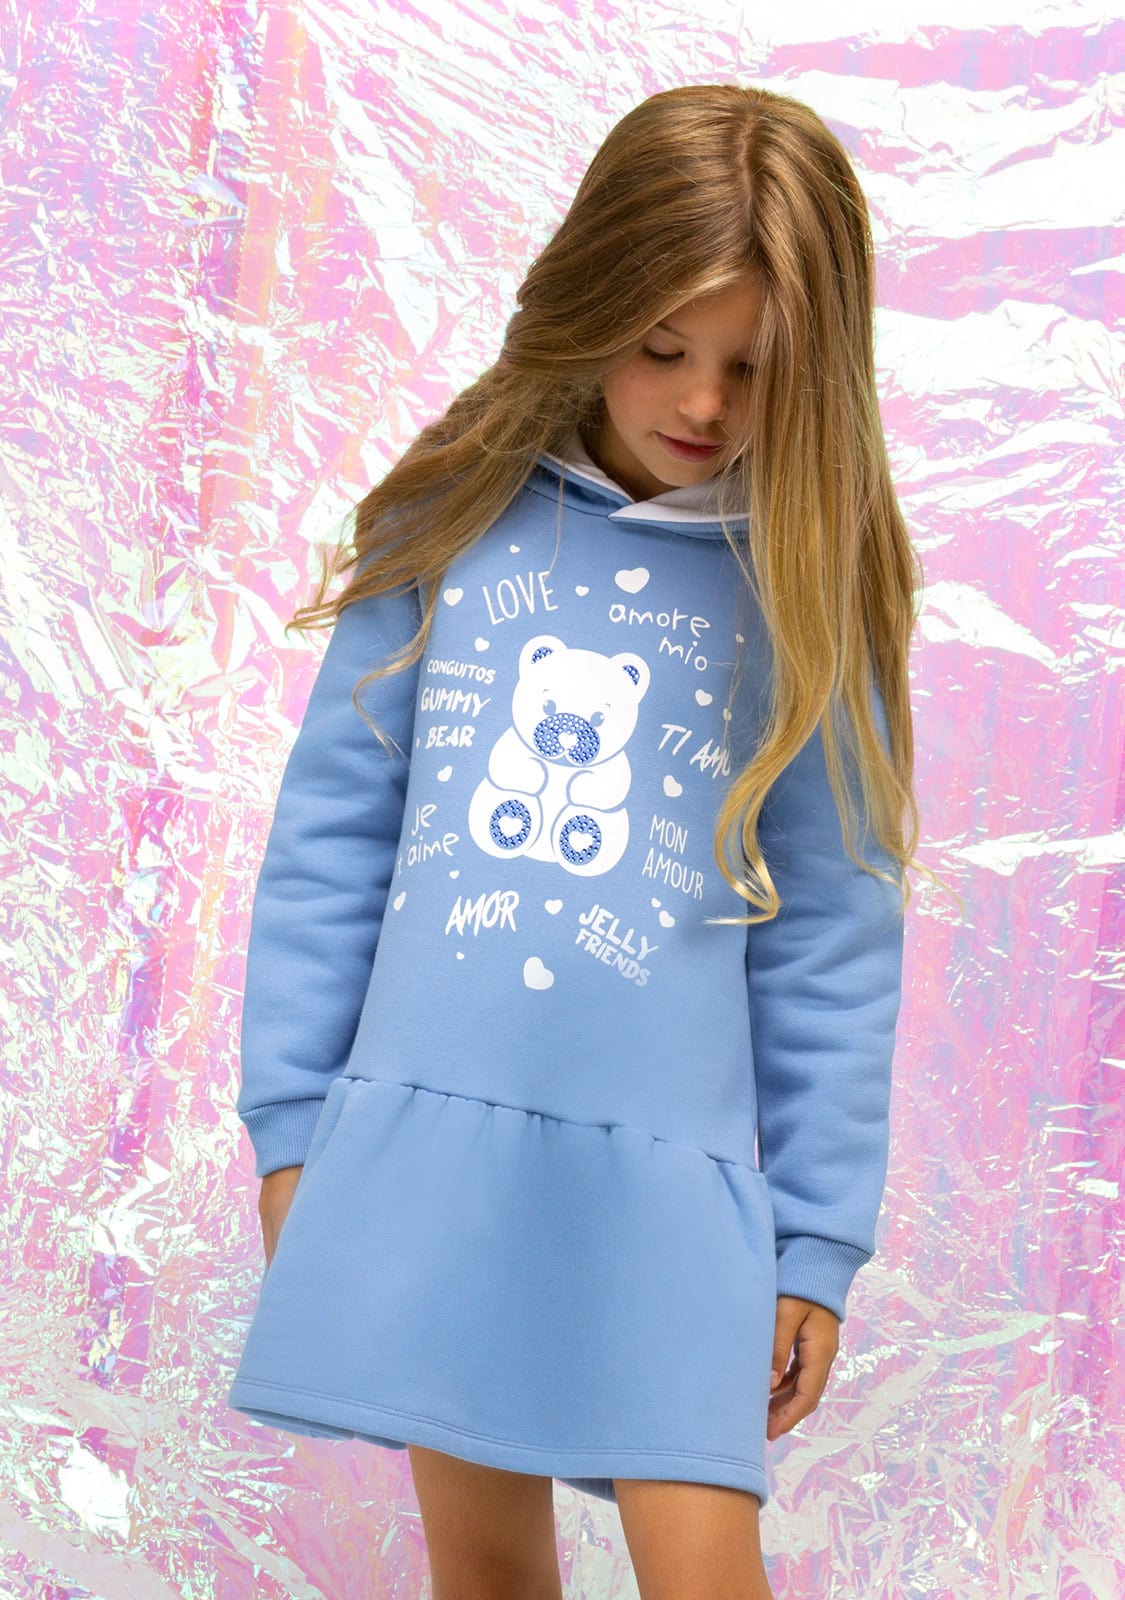 CONGUITOS TEXTIL Clothing Girl's Blue Bear Rhinestones Hooded Dress